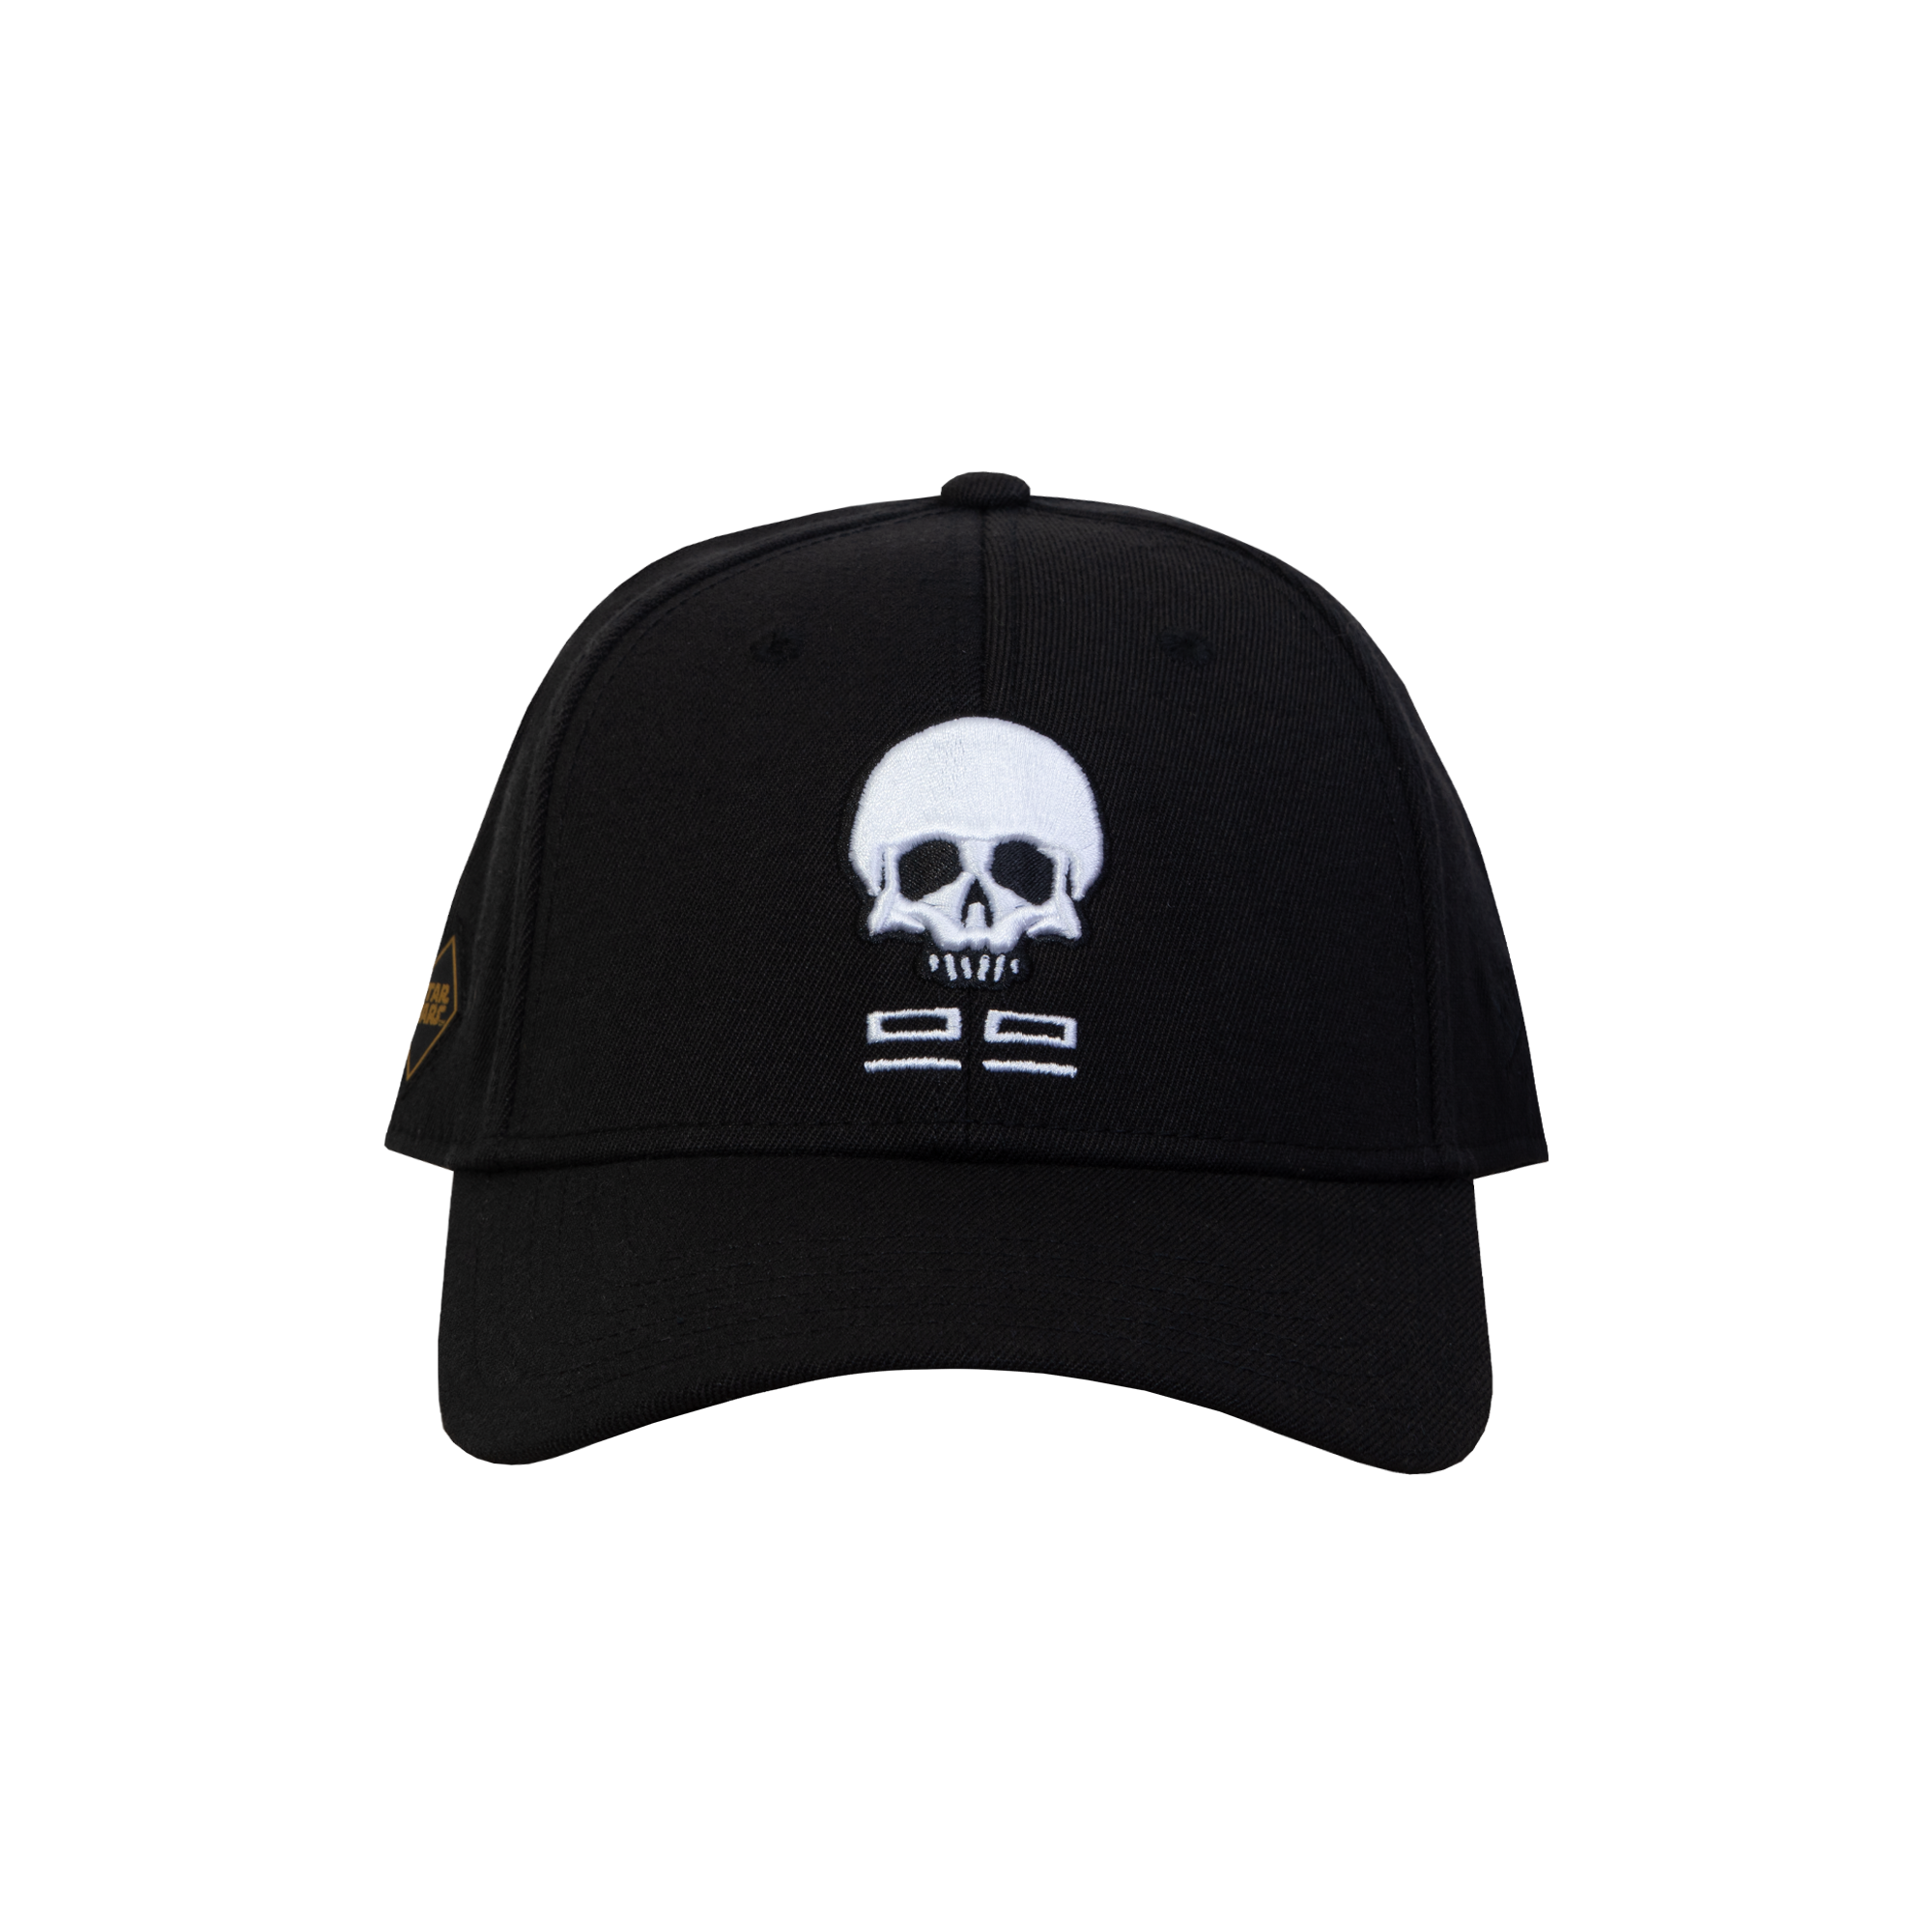 Star Wars Bad Batch Black Hat